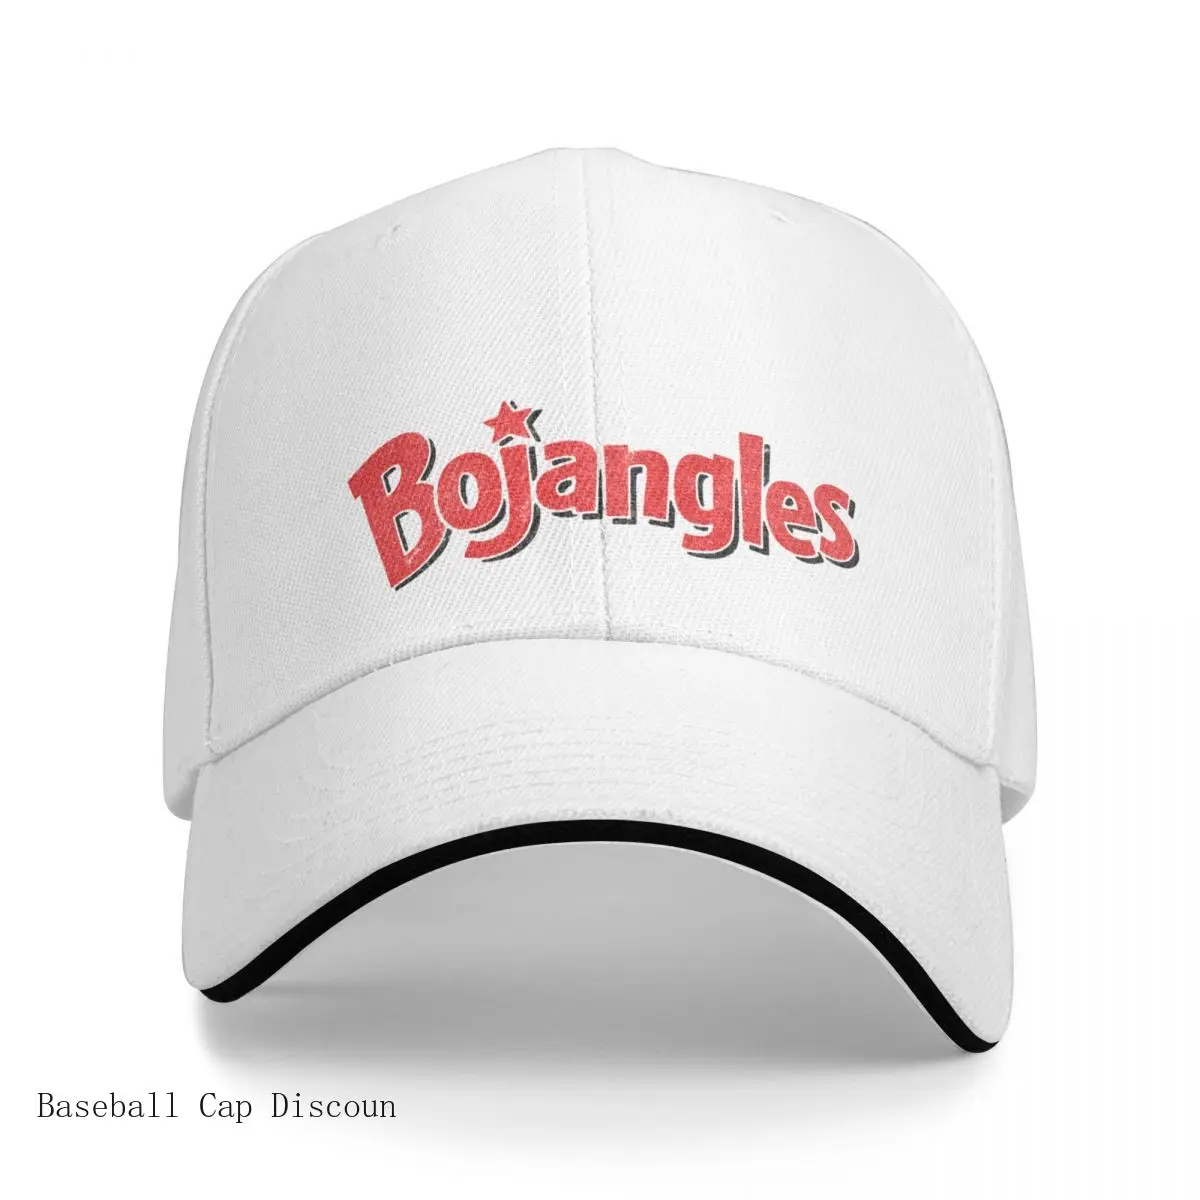 

New Bojangles - Vintage Faded Texture Logo Cap Baseball Cap Visor Hiking Hat Brand Man Caps Women's Hats For The Sun Men's